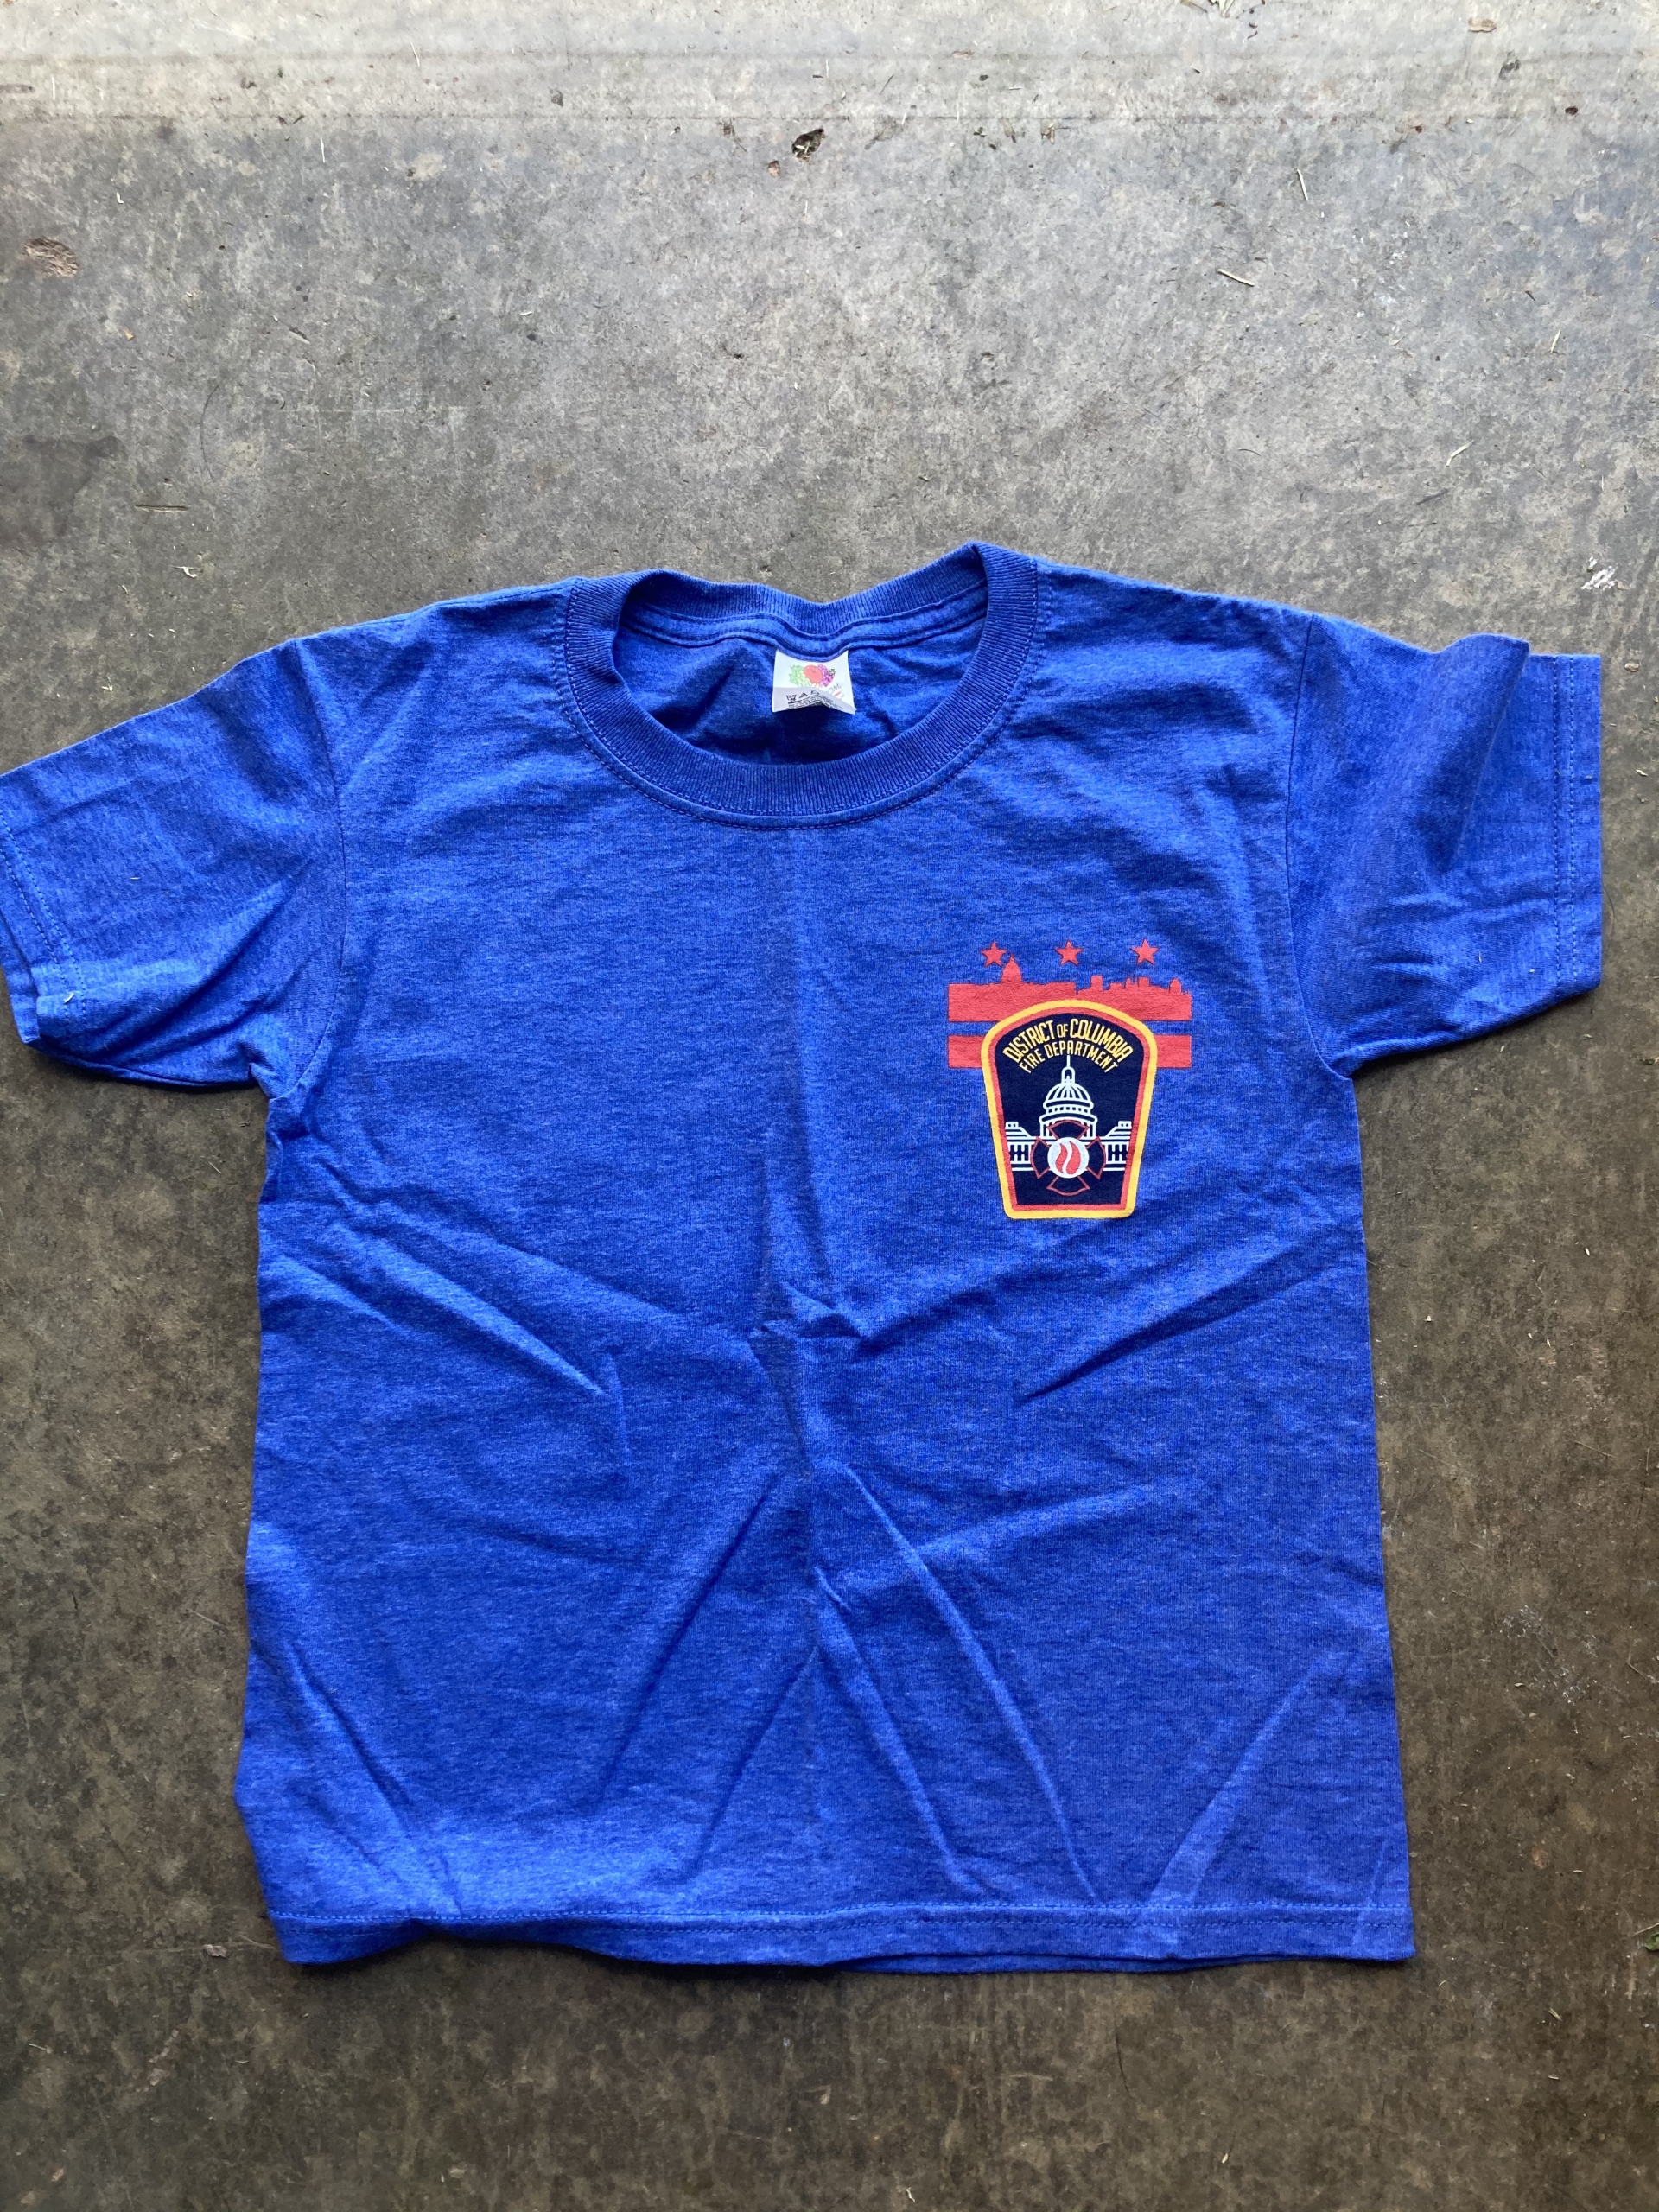 Vintage T-Shirt (Kids) - D.C. Firefighters Burn Foundation